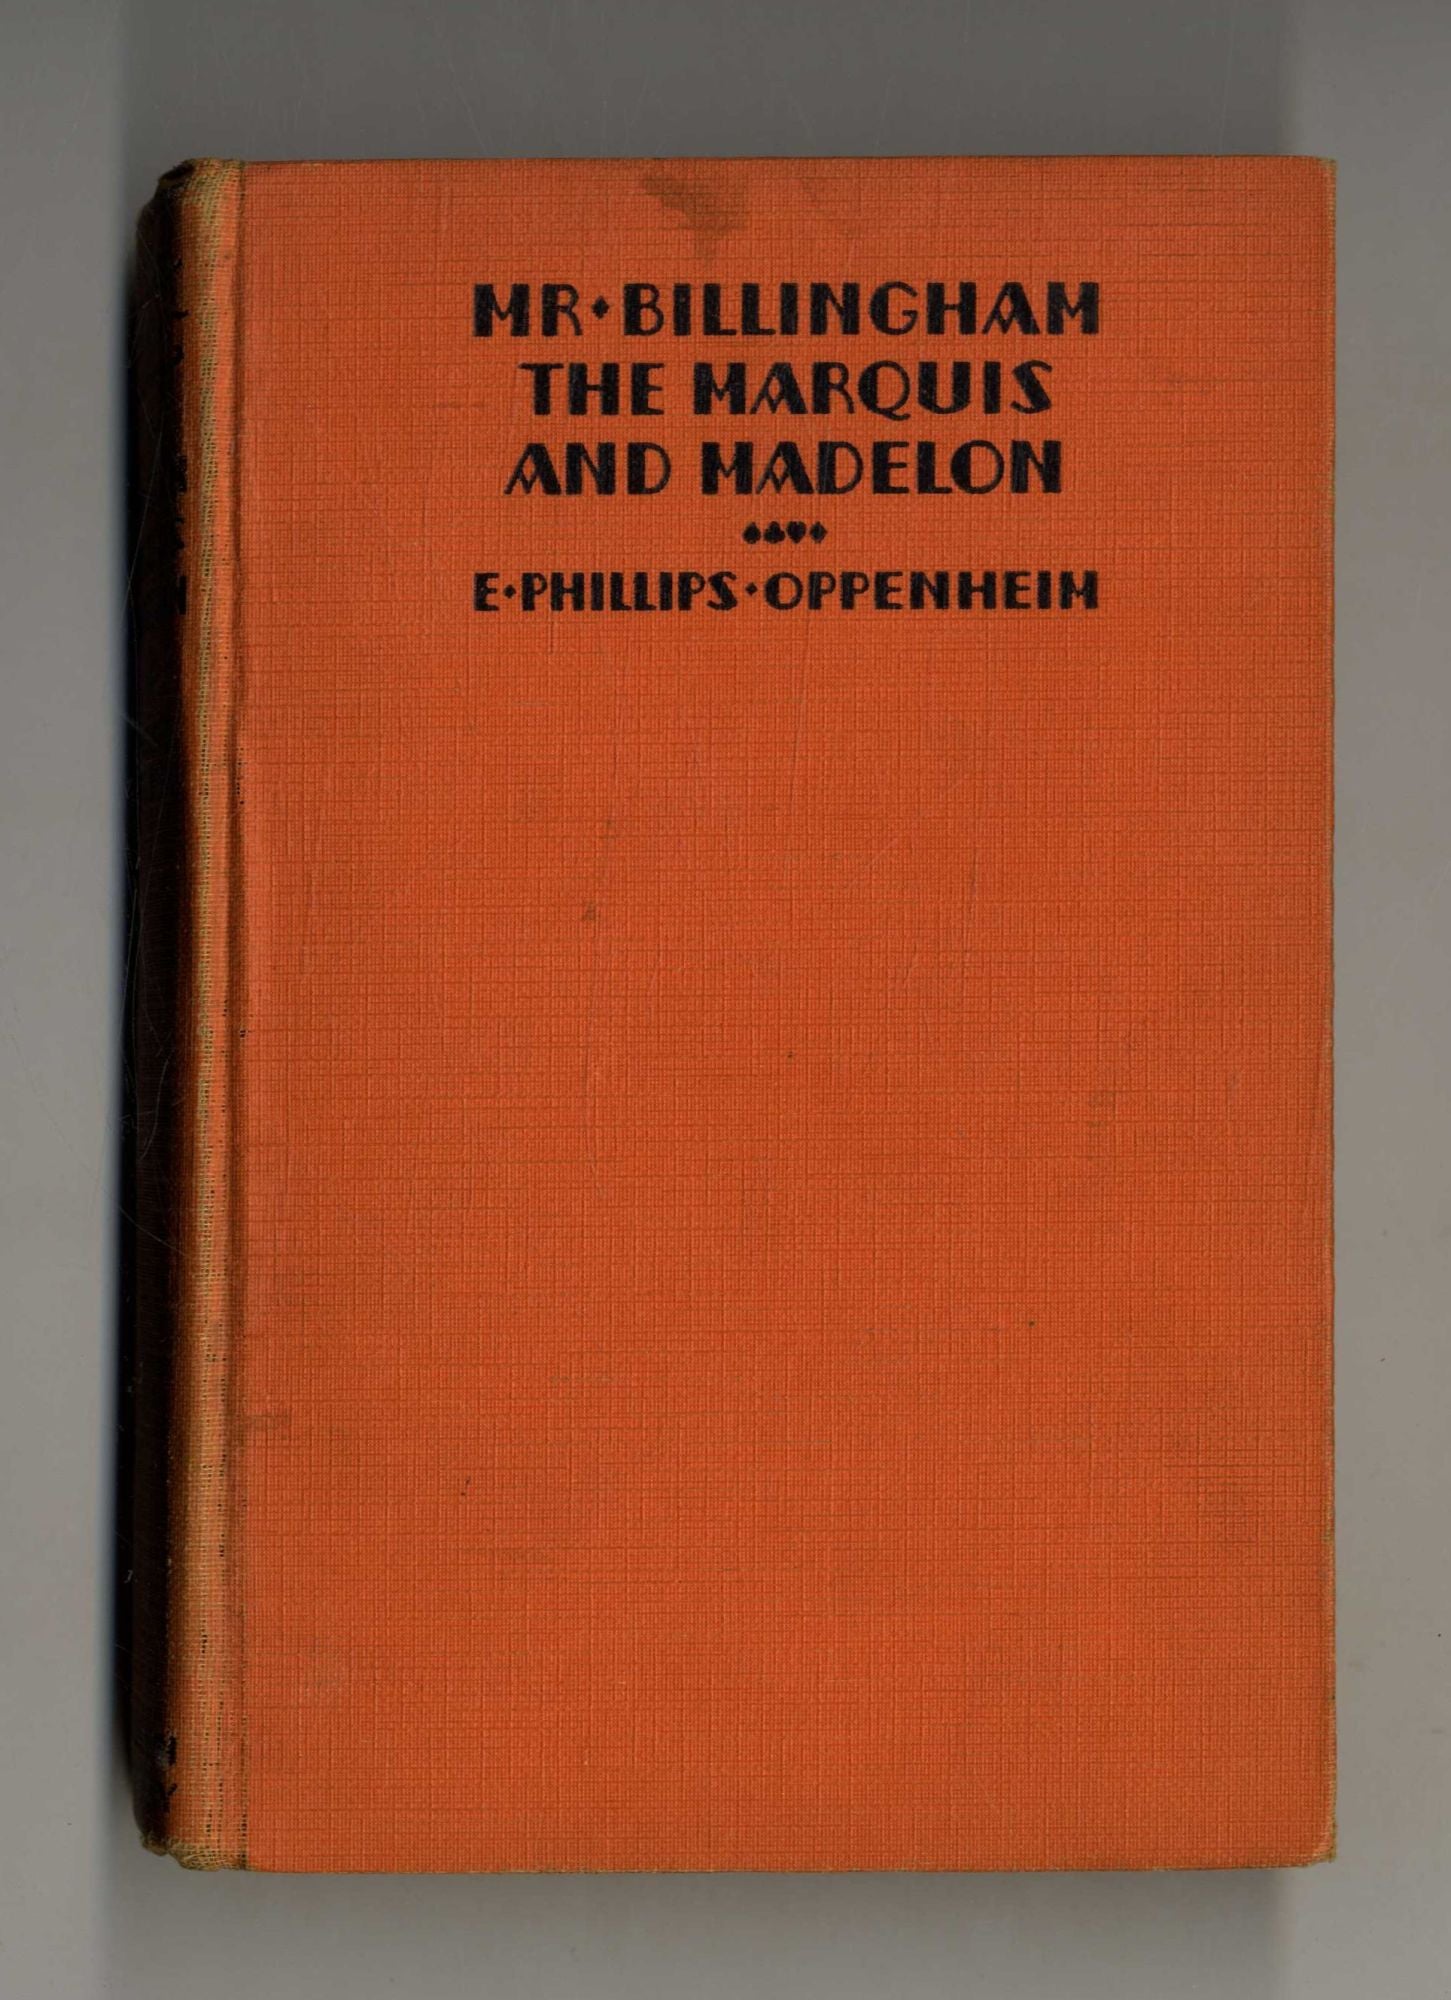 Book #160090 Mr. Billingham, the Marquis and Madelon. E. Phillips Oppenheim.